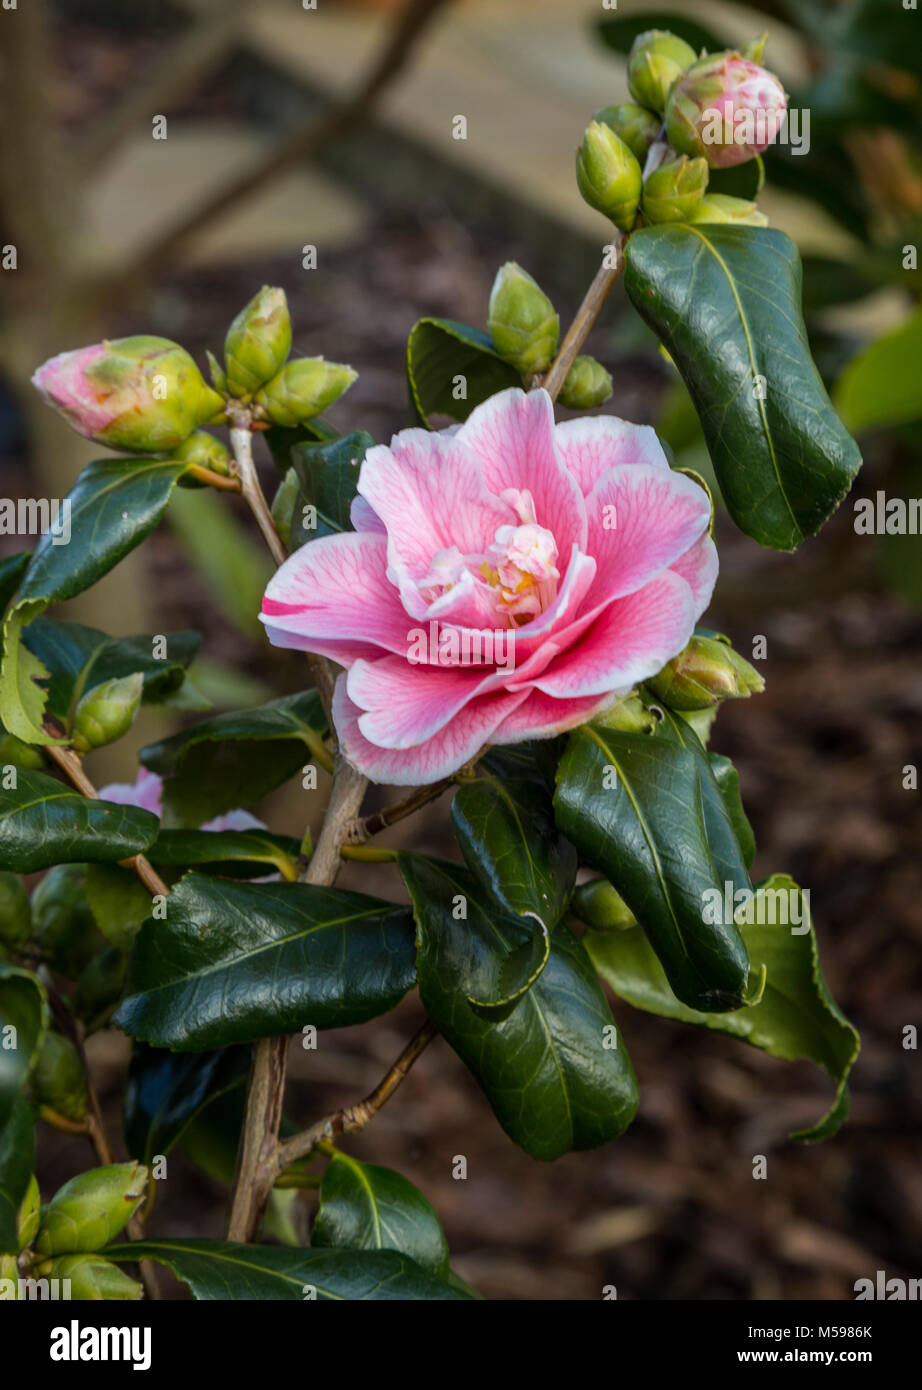 Camellia japonica Lady Vansittart in fiore, lascia che mostra alcuni leaf curl. Foto Stock